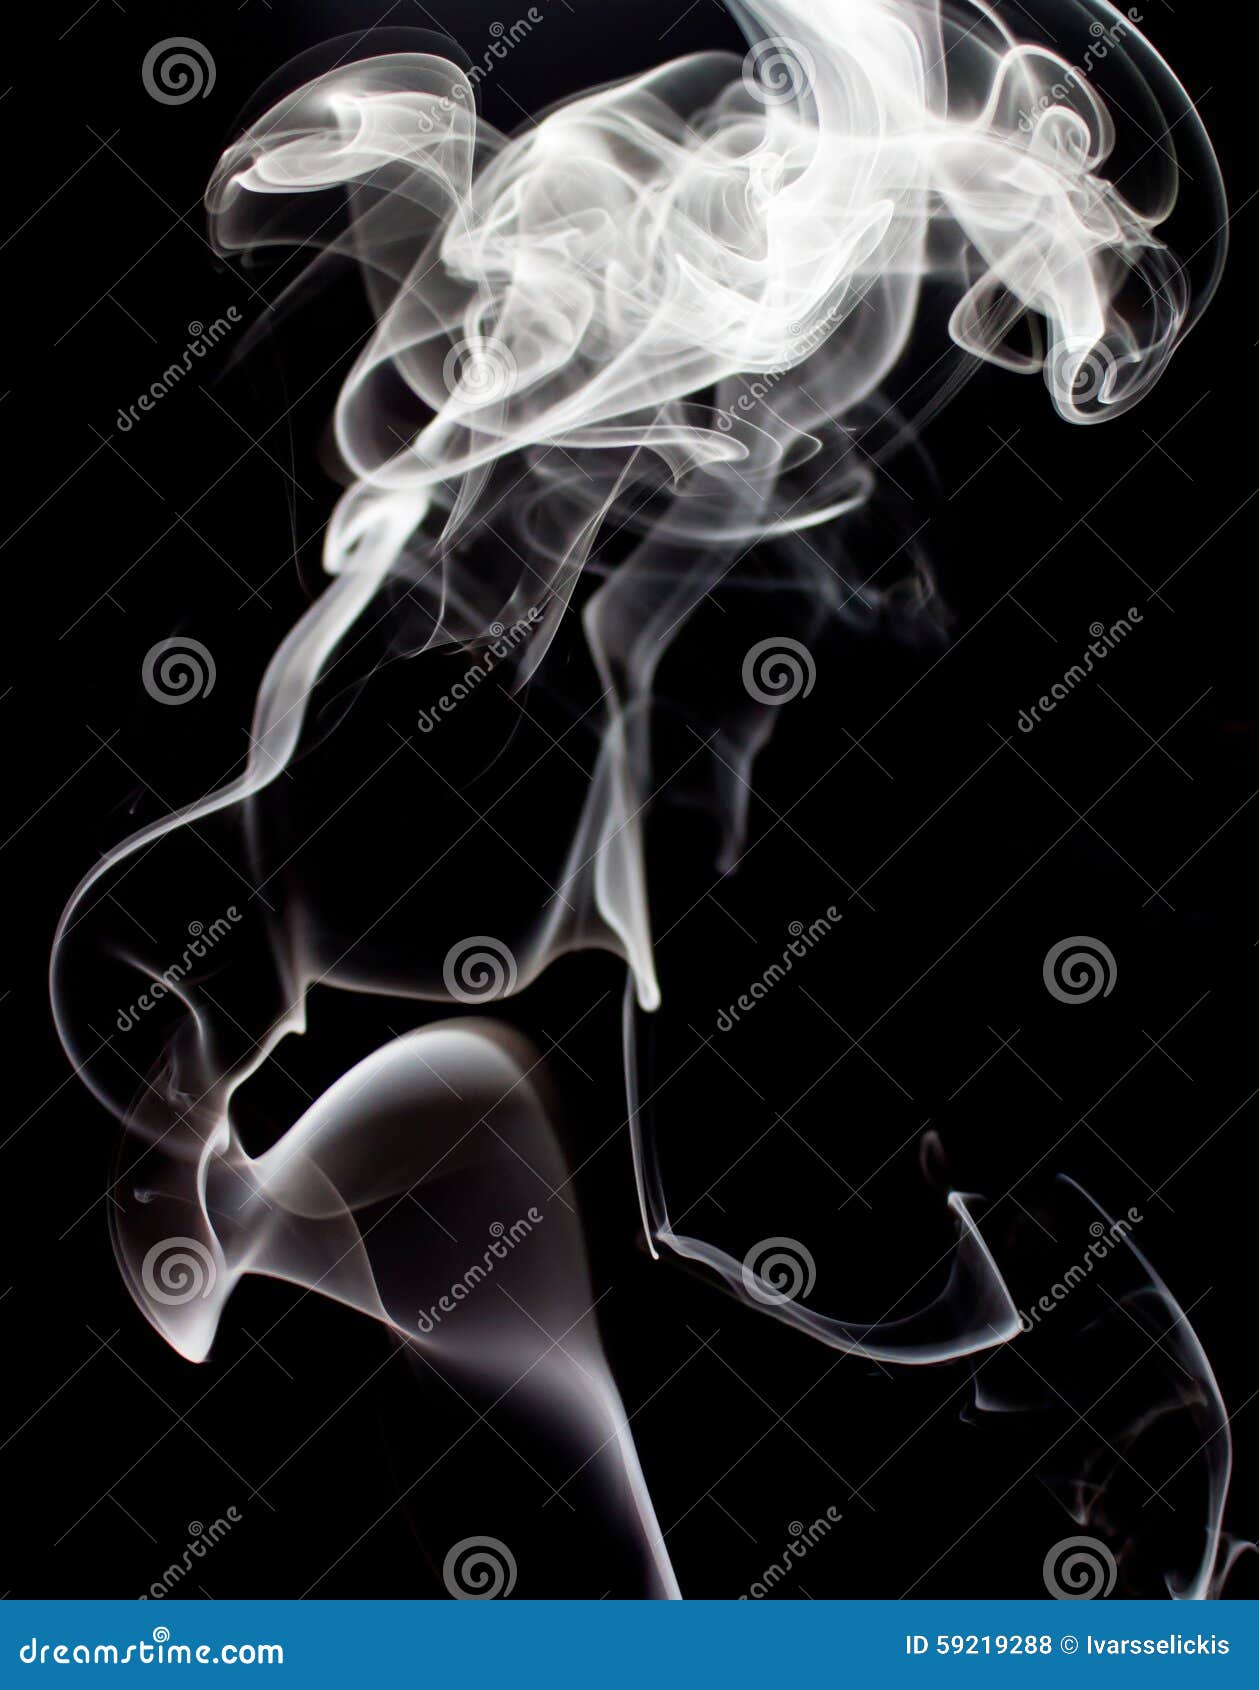 White Smoke, Isolated on Black Background. Stock Photo - Image of pollute,  pattern: 59219288